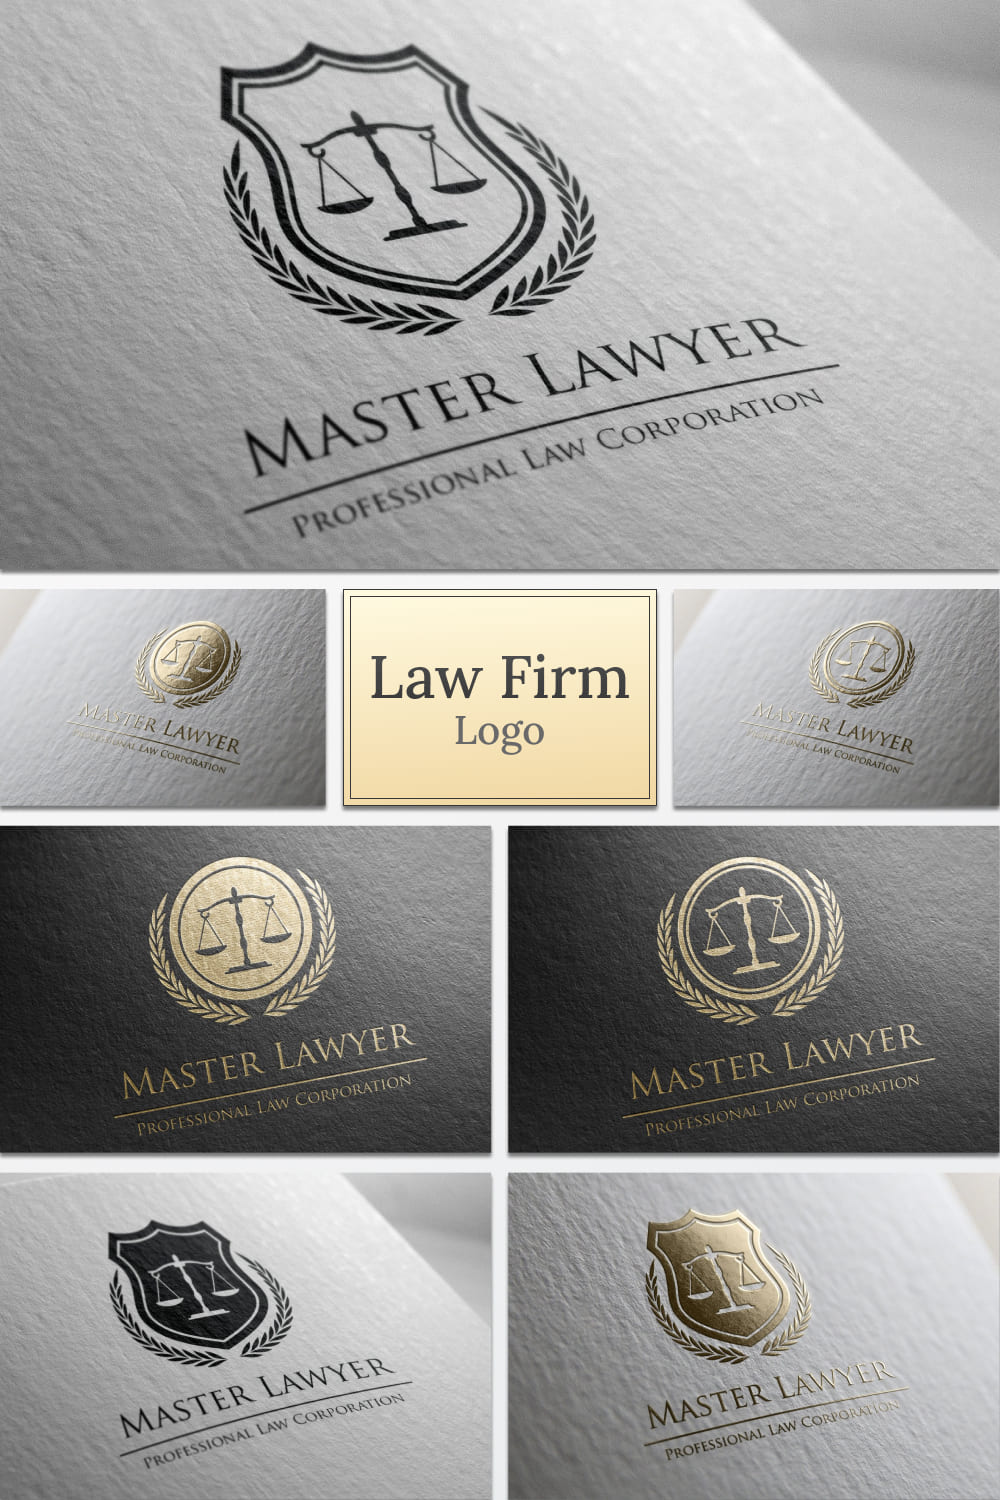 law firm logos design.